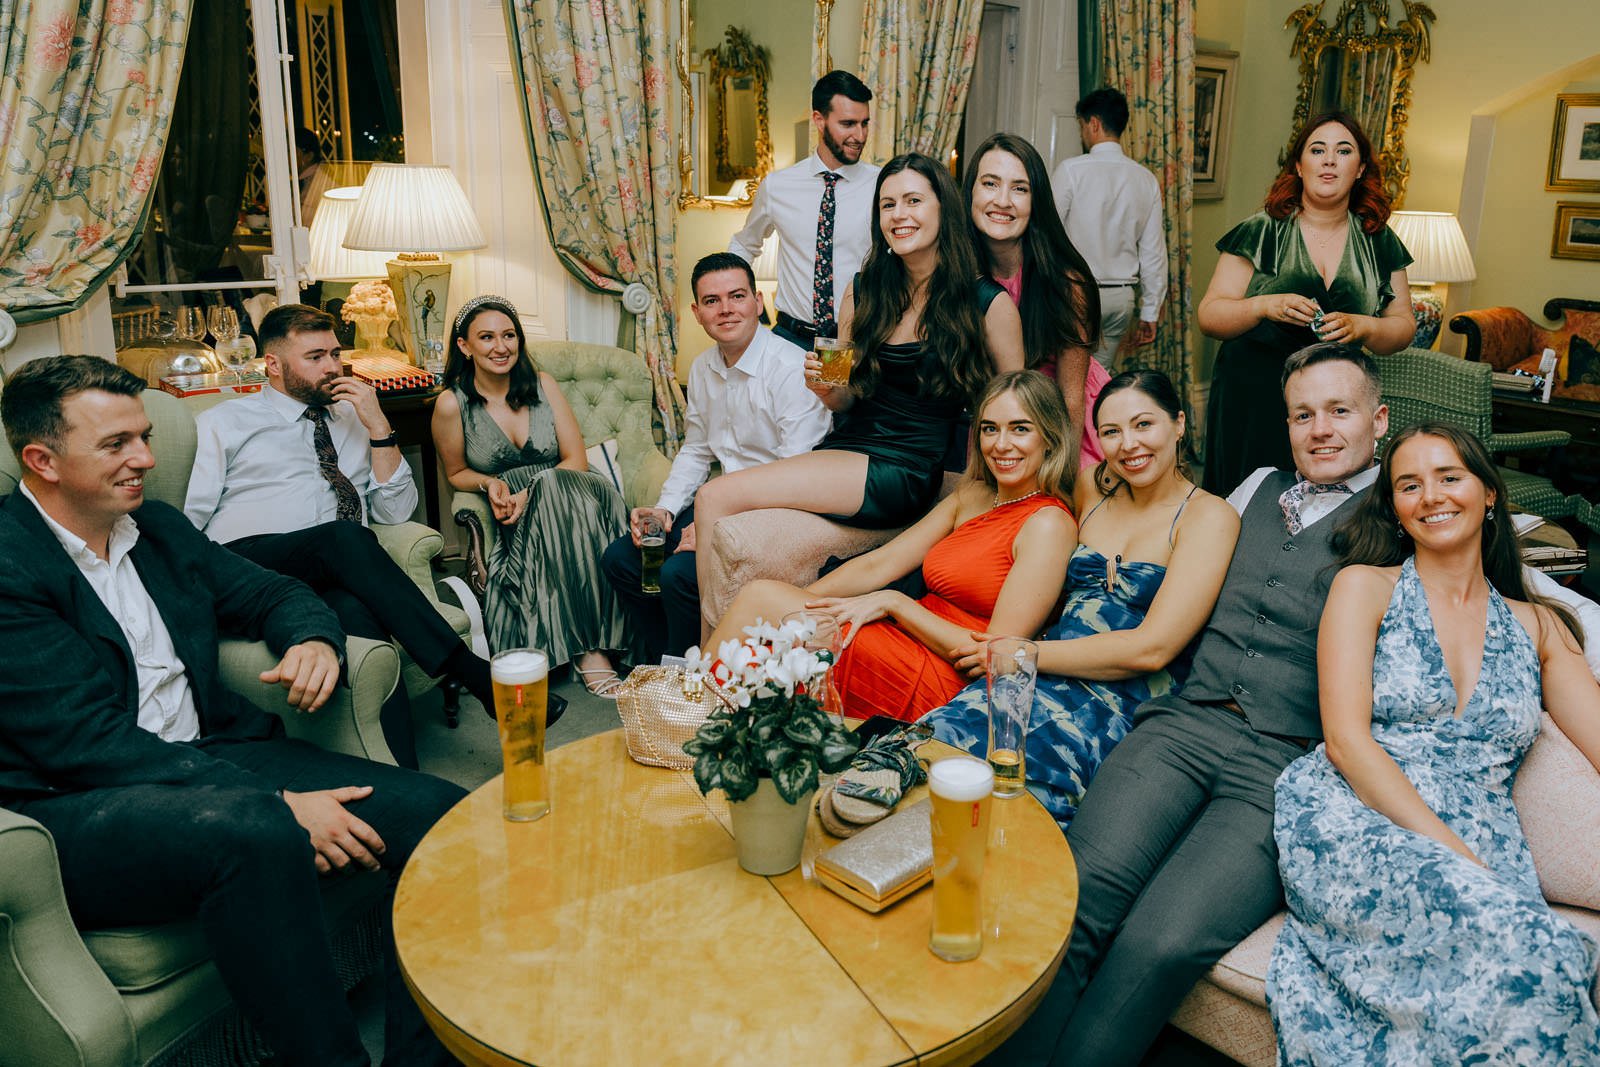 Marlfield_House-best-wedding-venues-Ireland-28.jpg